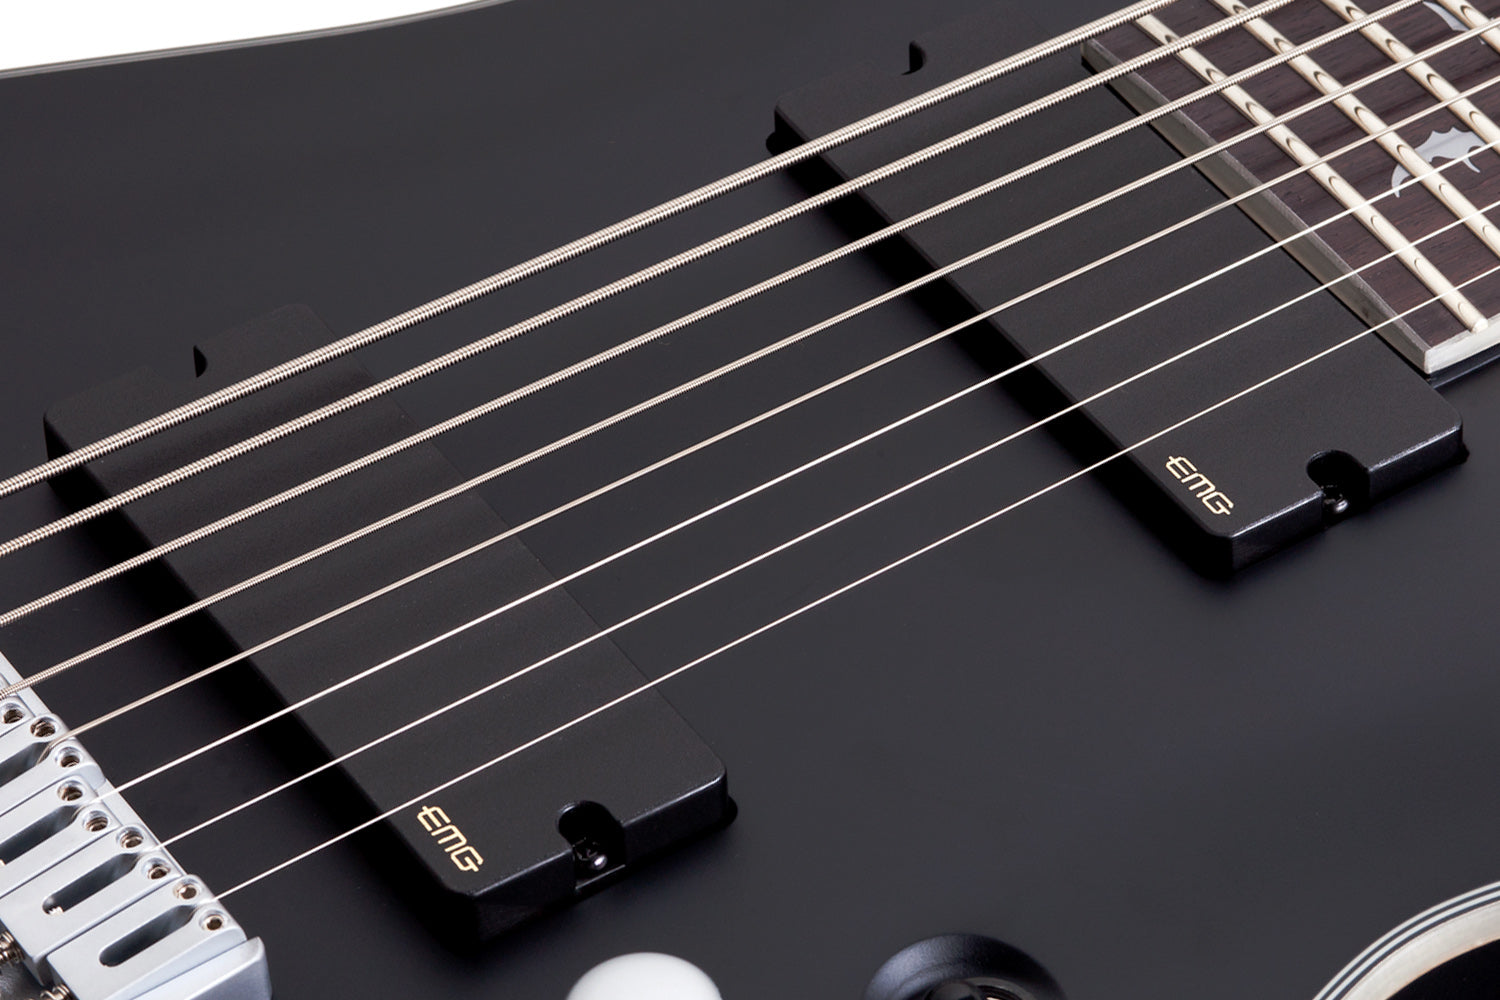 Schecter Damien Series DAMIEN-PLAT-8-SBK Satin Black 8 String Guitar with EMG 81, 85 Pickups 1187-SHC